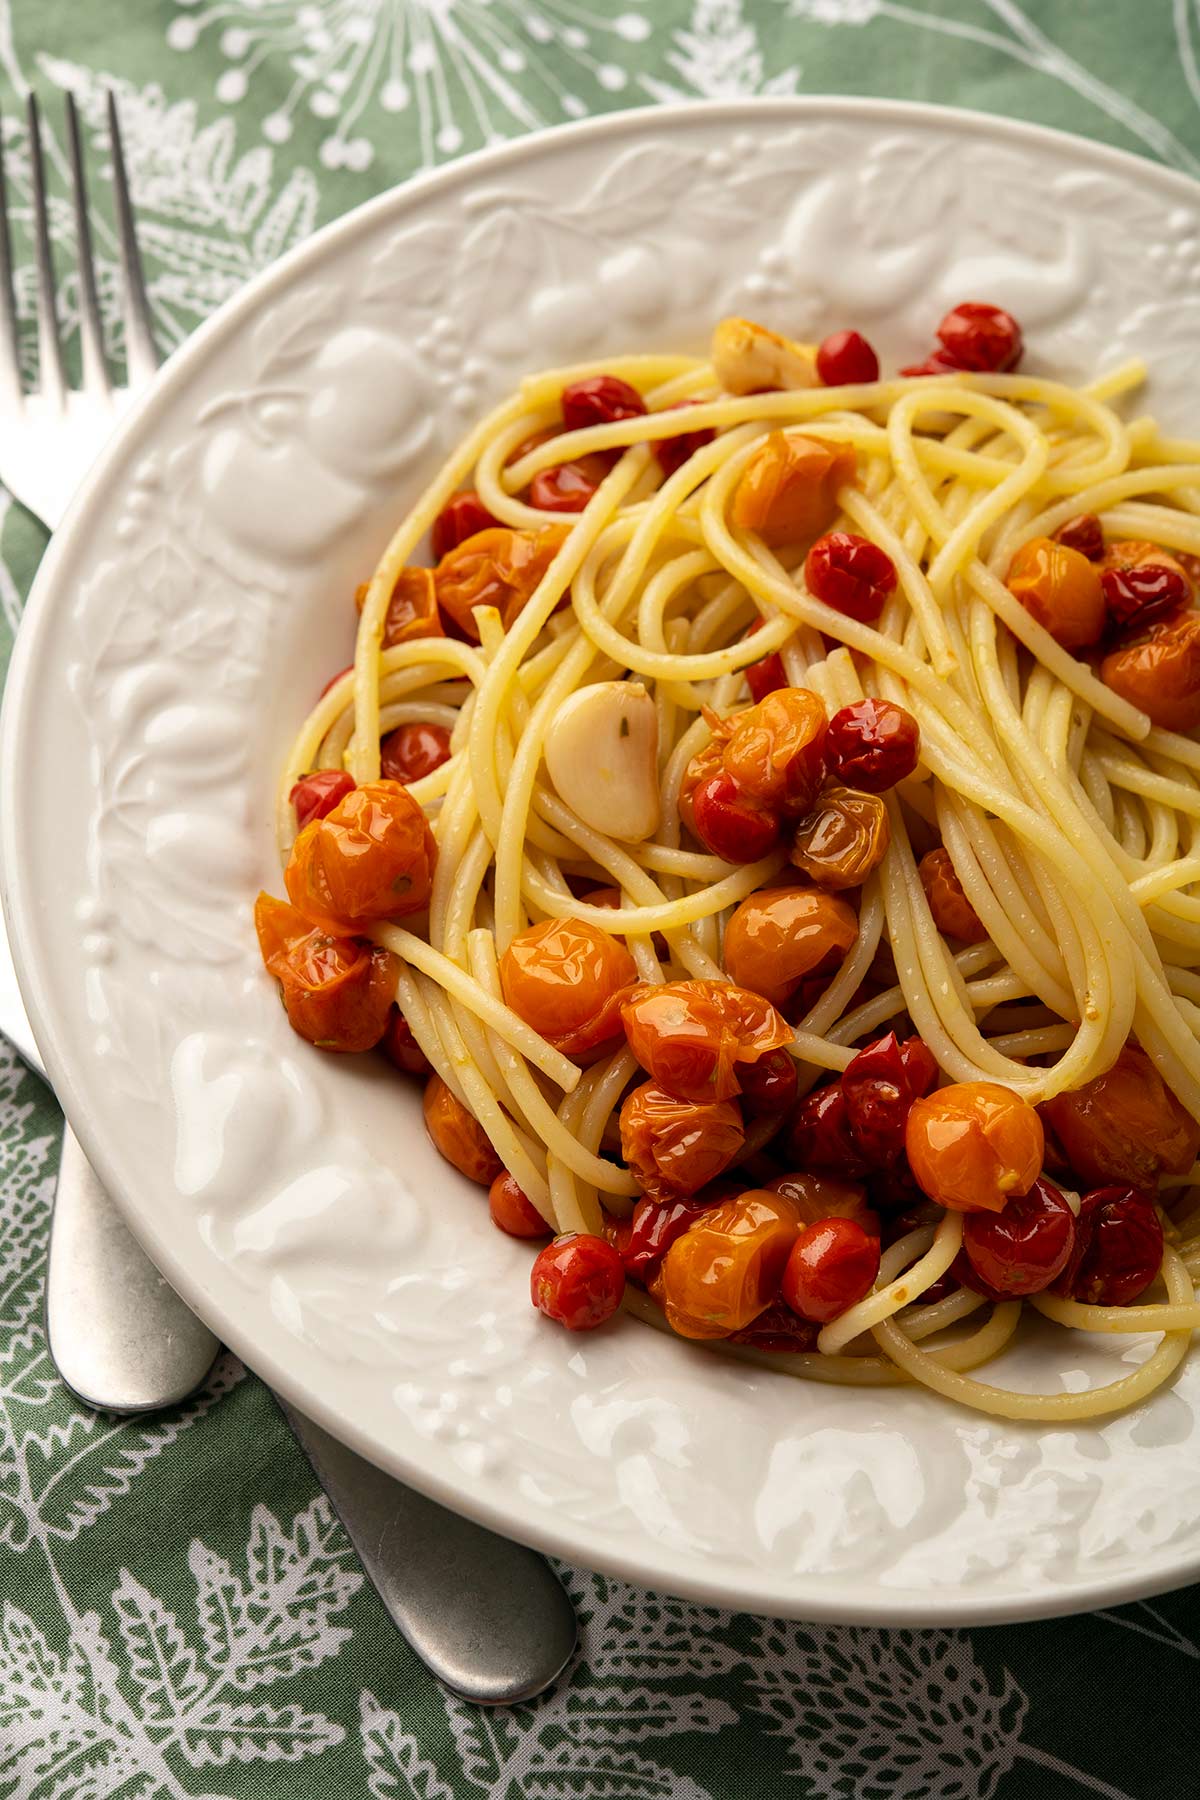 cherry tomato confit over pasta in a bowl